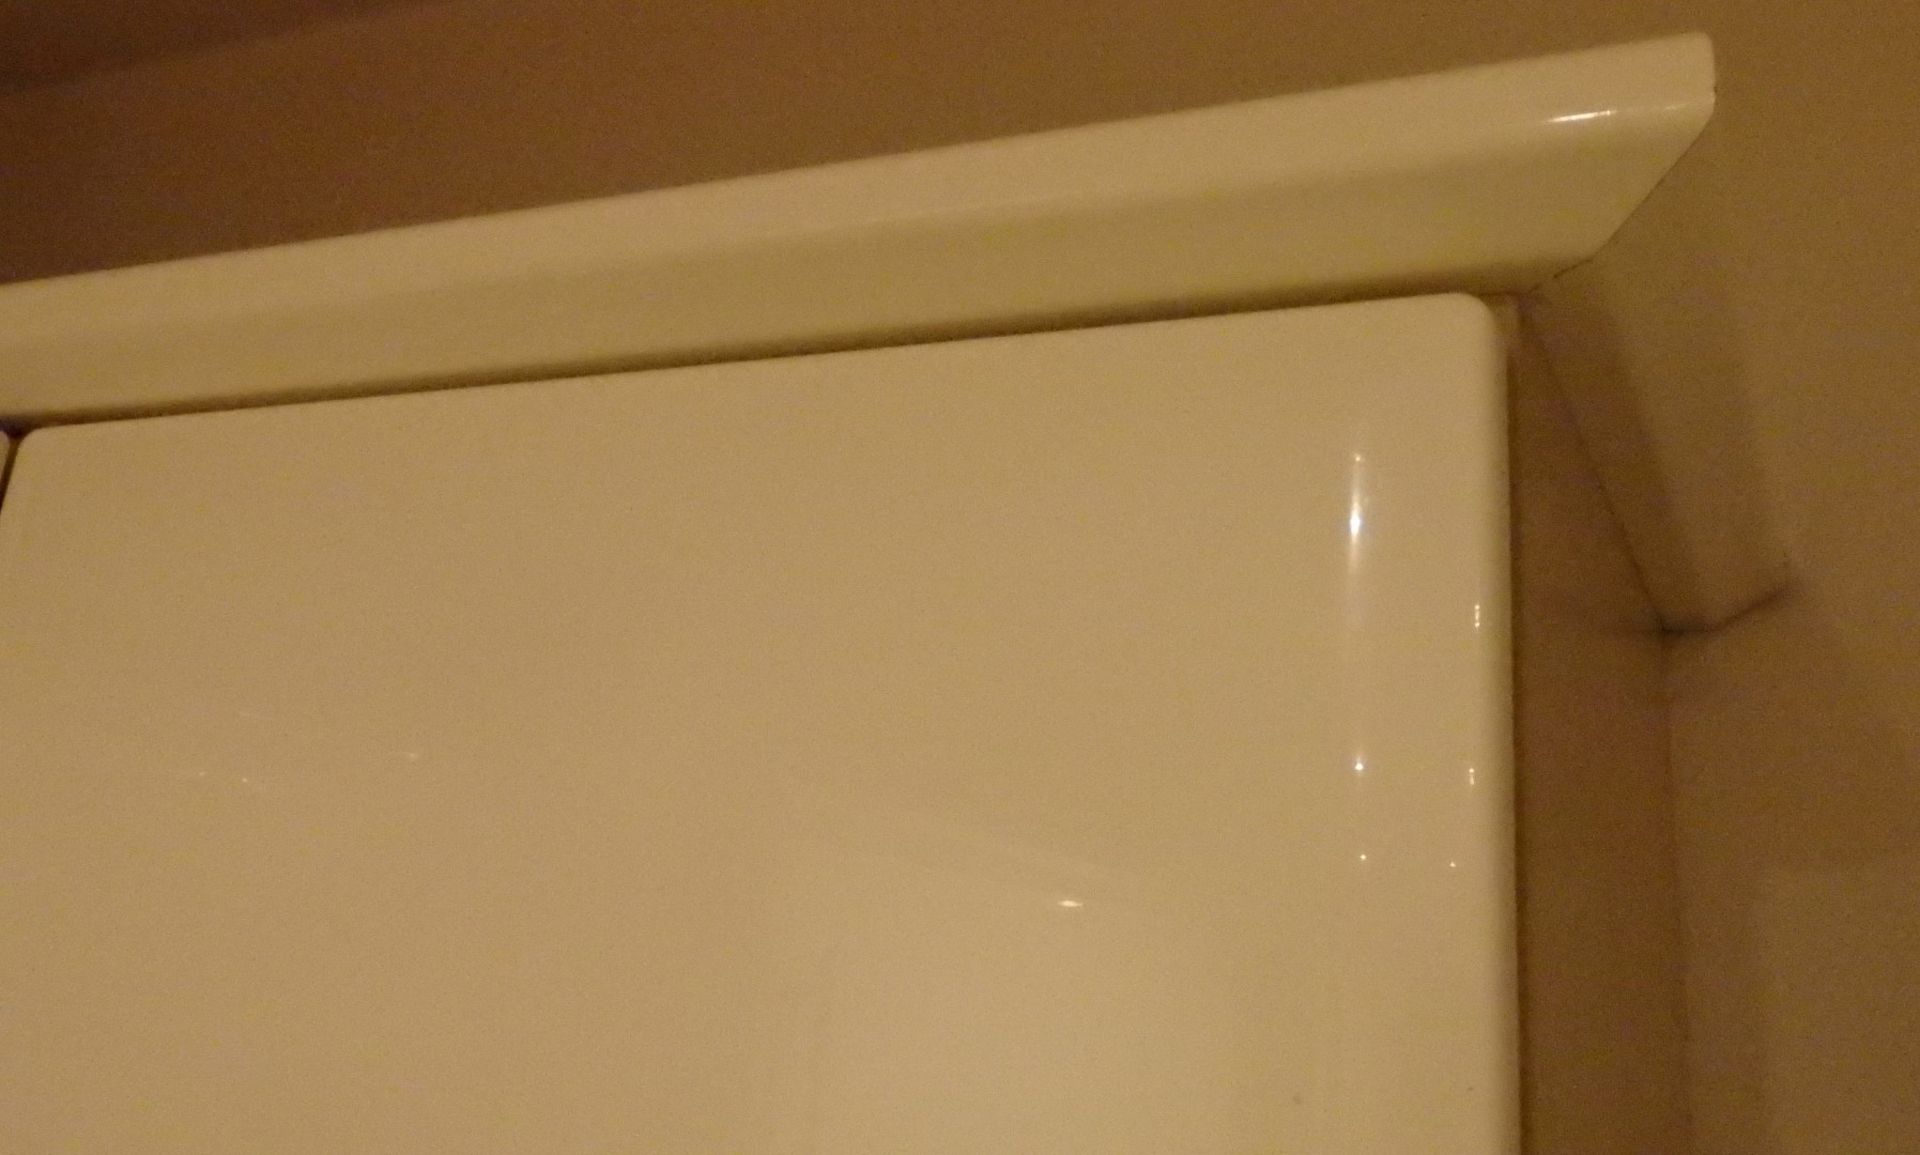 1 x Hygena Fitted Kitchen - Cream Gloss Doors With T Bar Handles - Black Granite Worktops - Bosch - Image 41 of 77